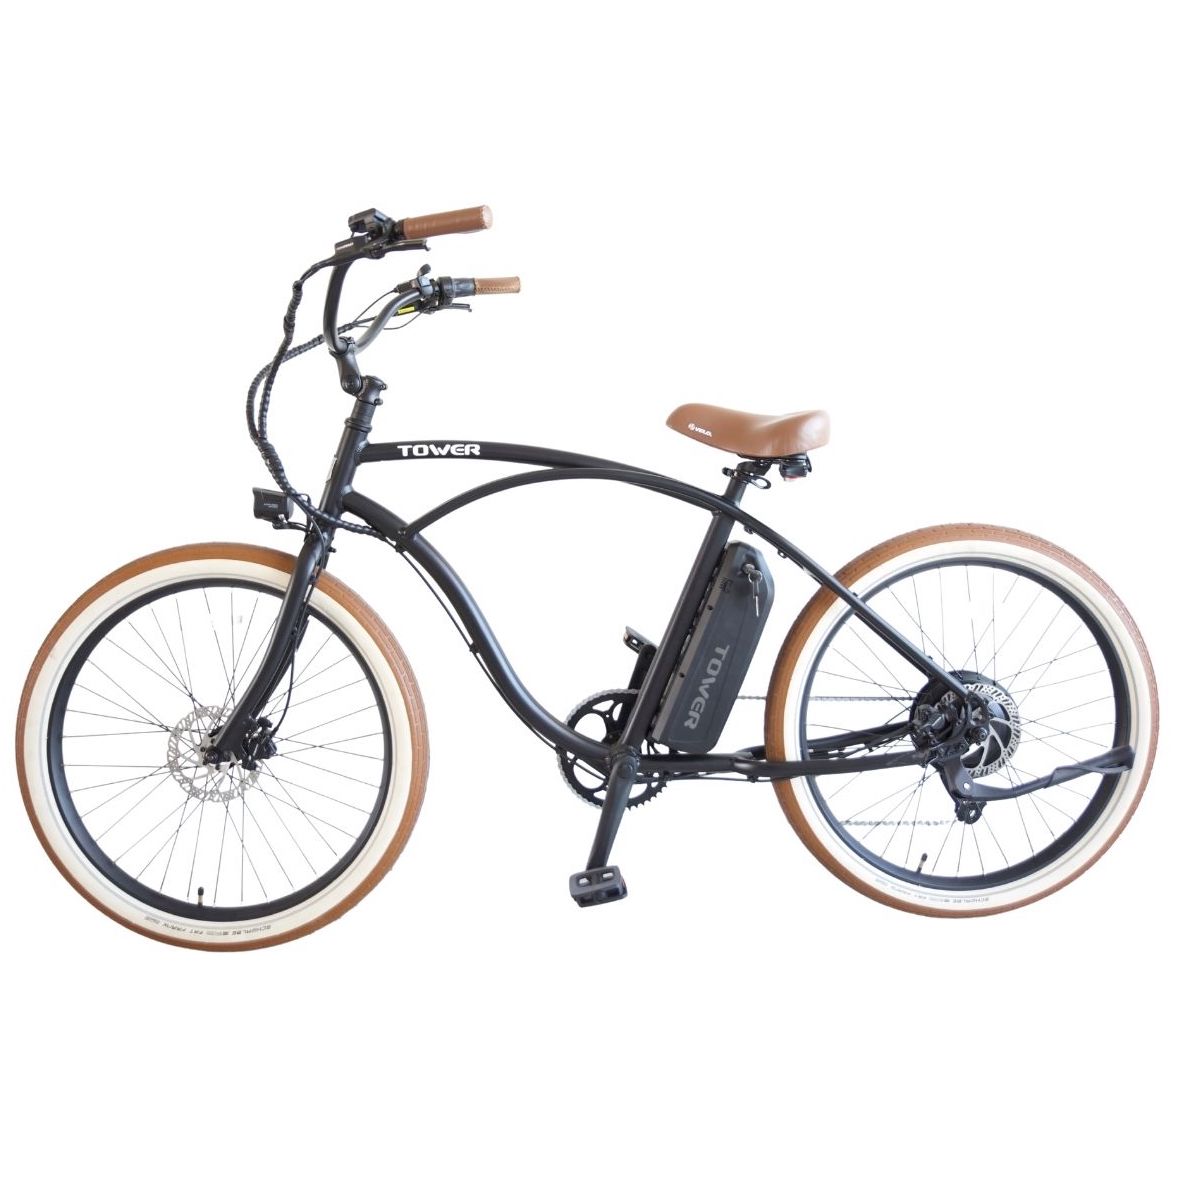 Shop Bicycle Hub & Bottom Bracket Bearings Online